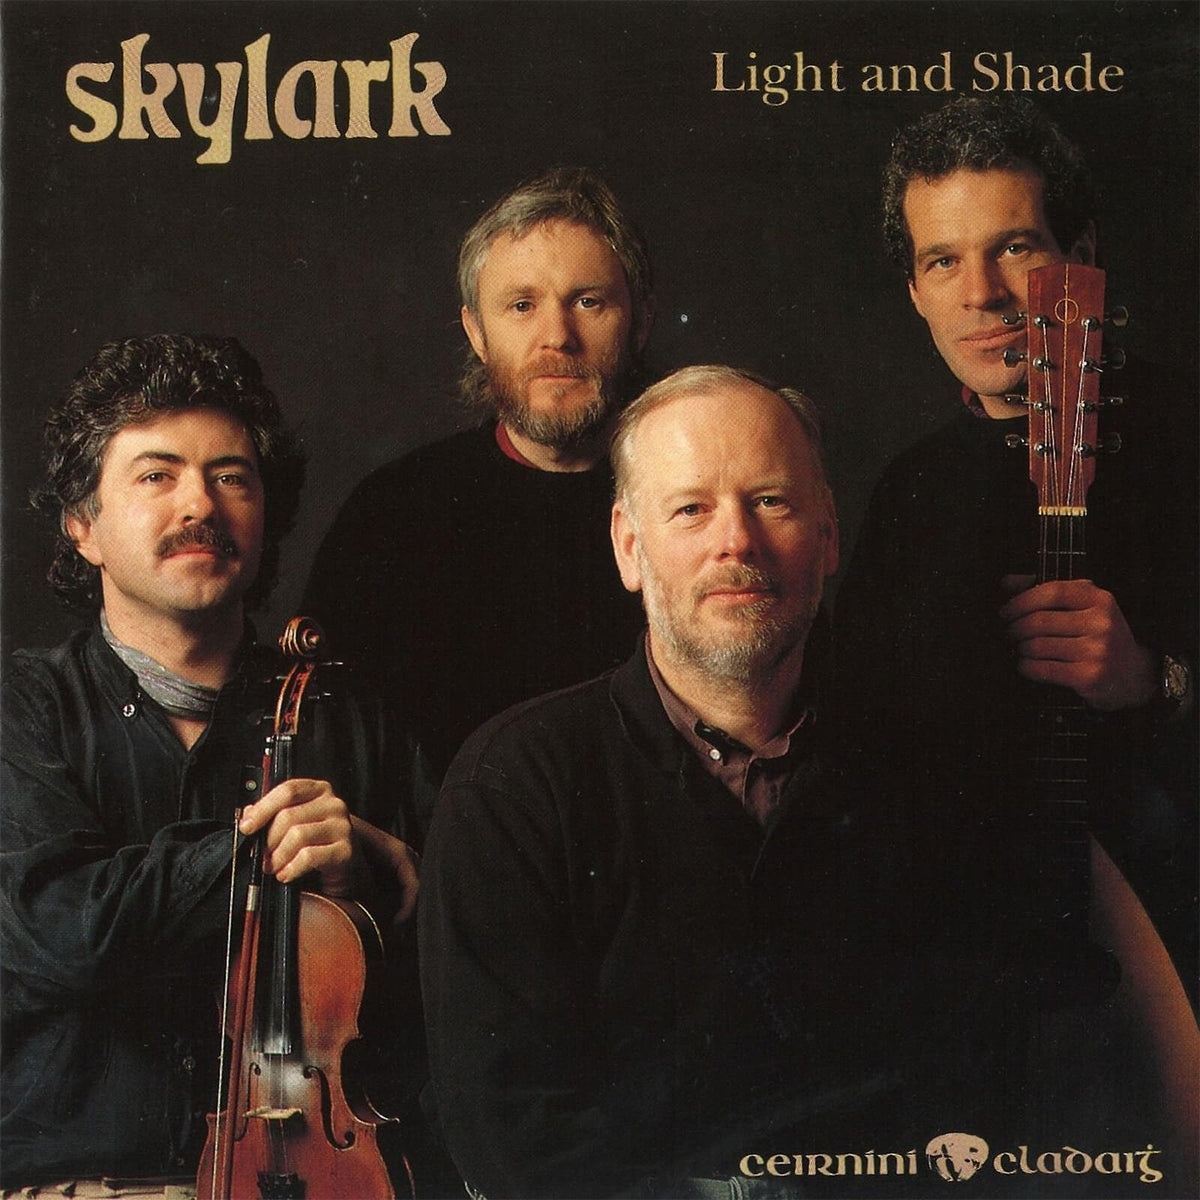 Skylark : Light and Shade